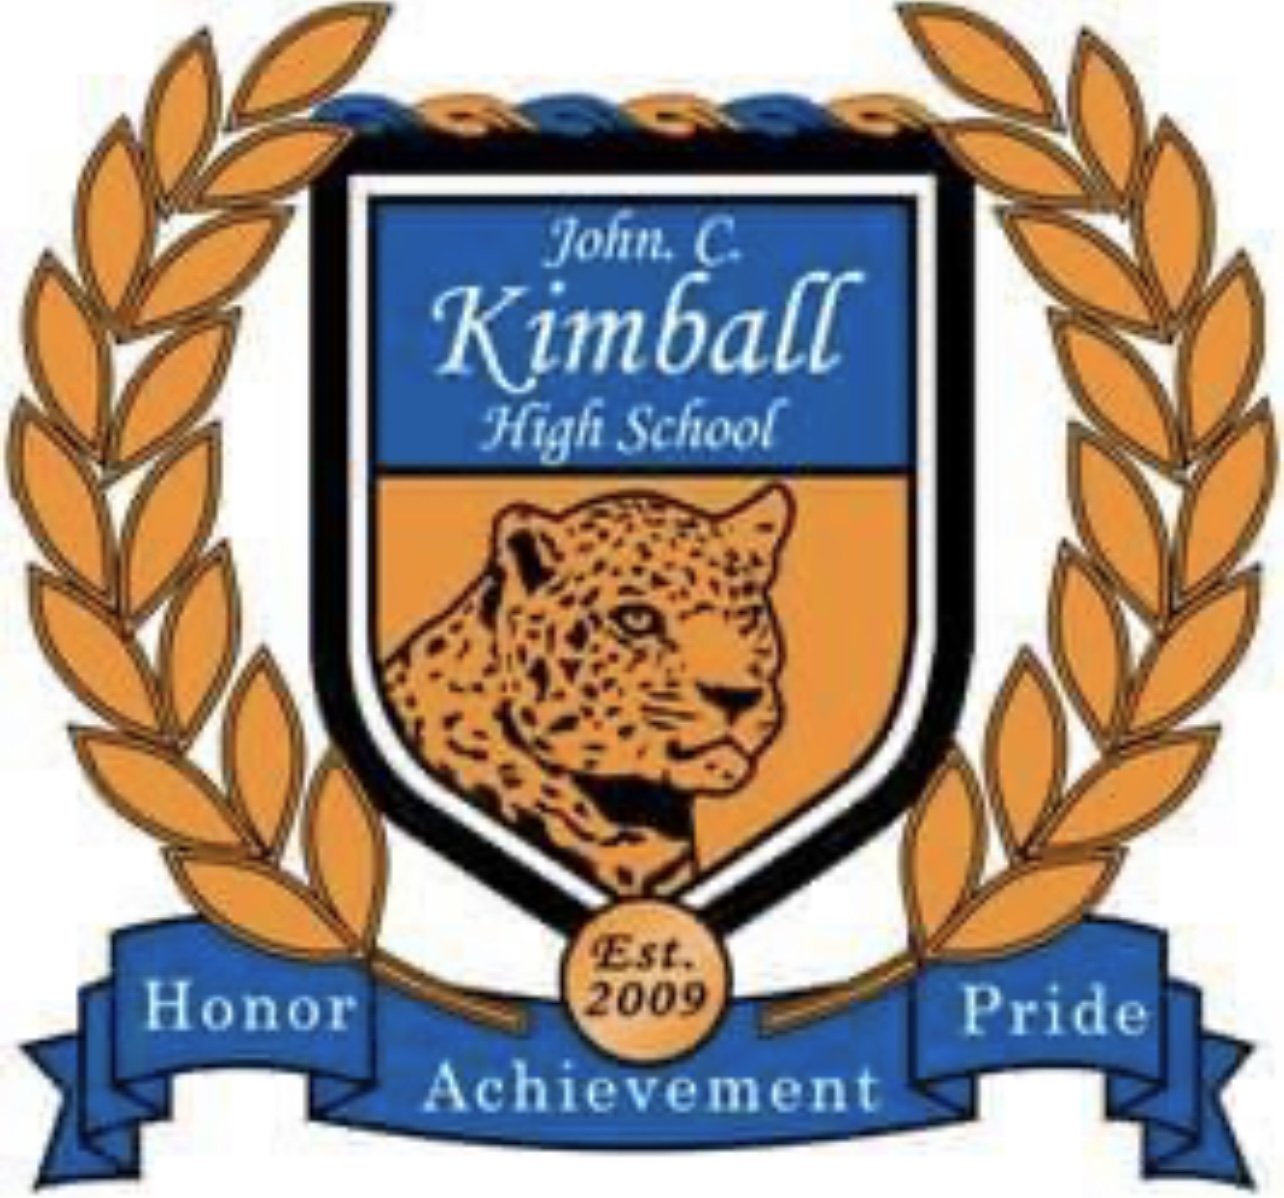 an award from John C Kimball Highschool, their logo has a cheetah